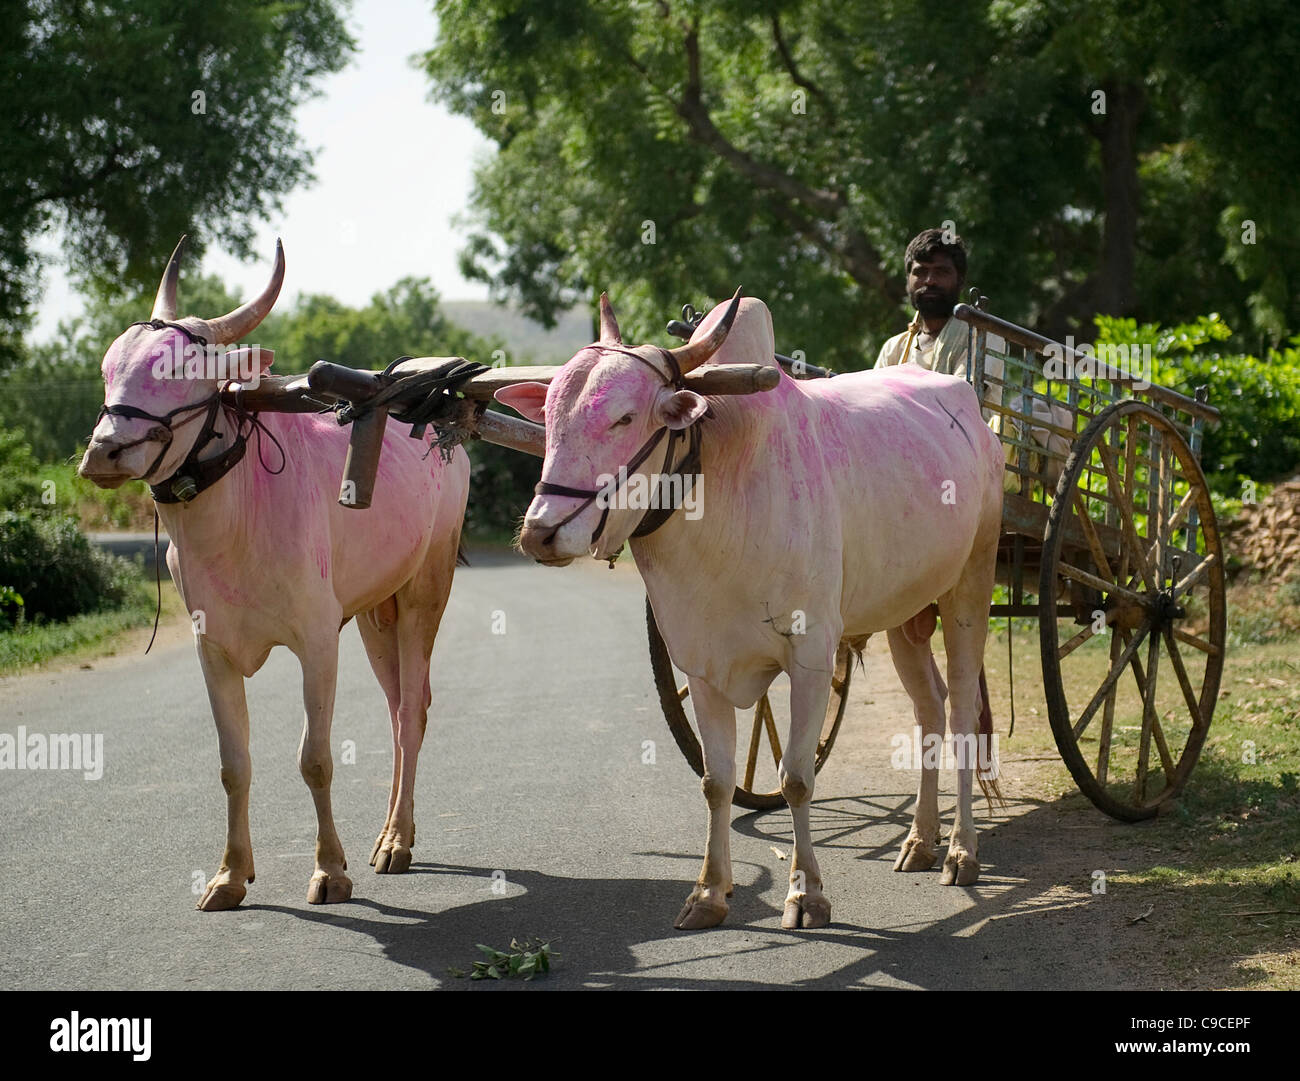 India, South Asia, Bullocks & Cart in rural scene. Cebu Brahmin humped cattle. Stock Photo